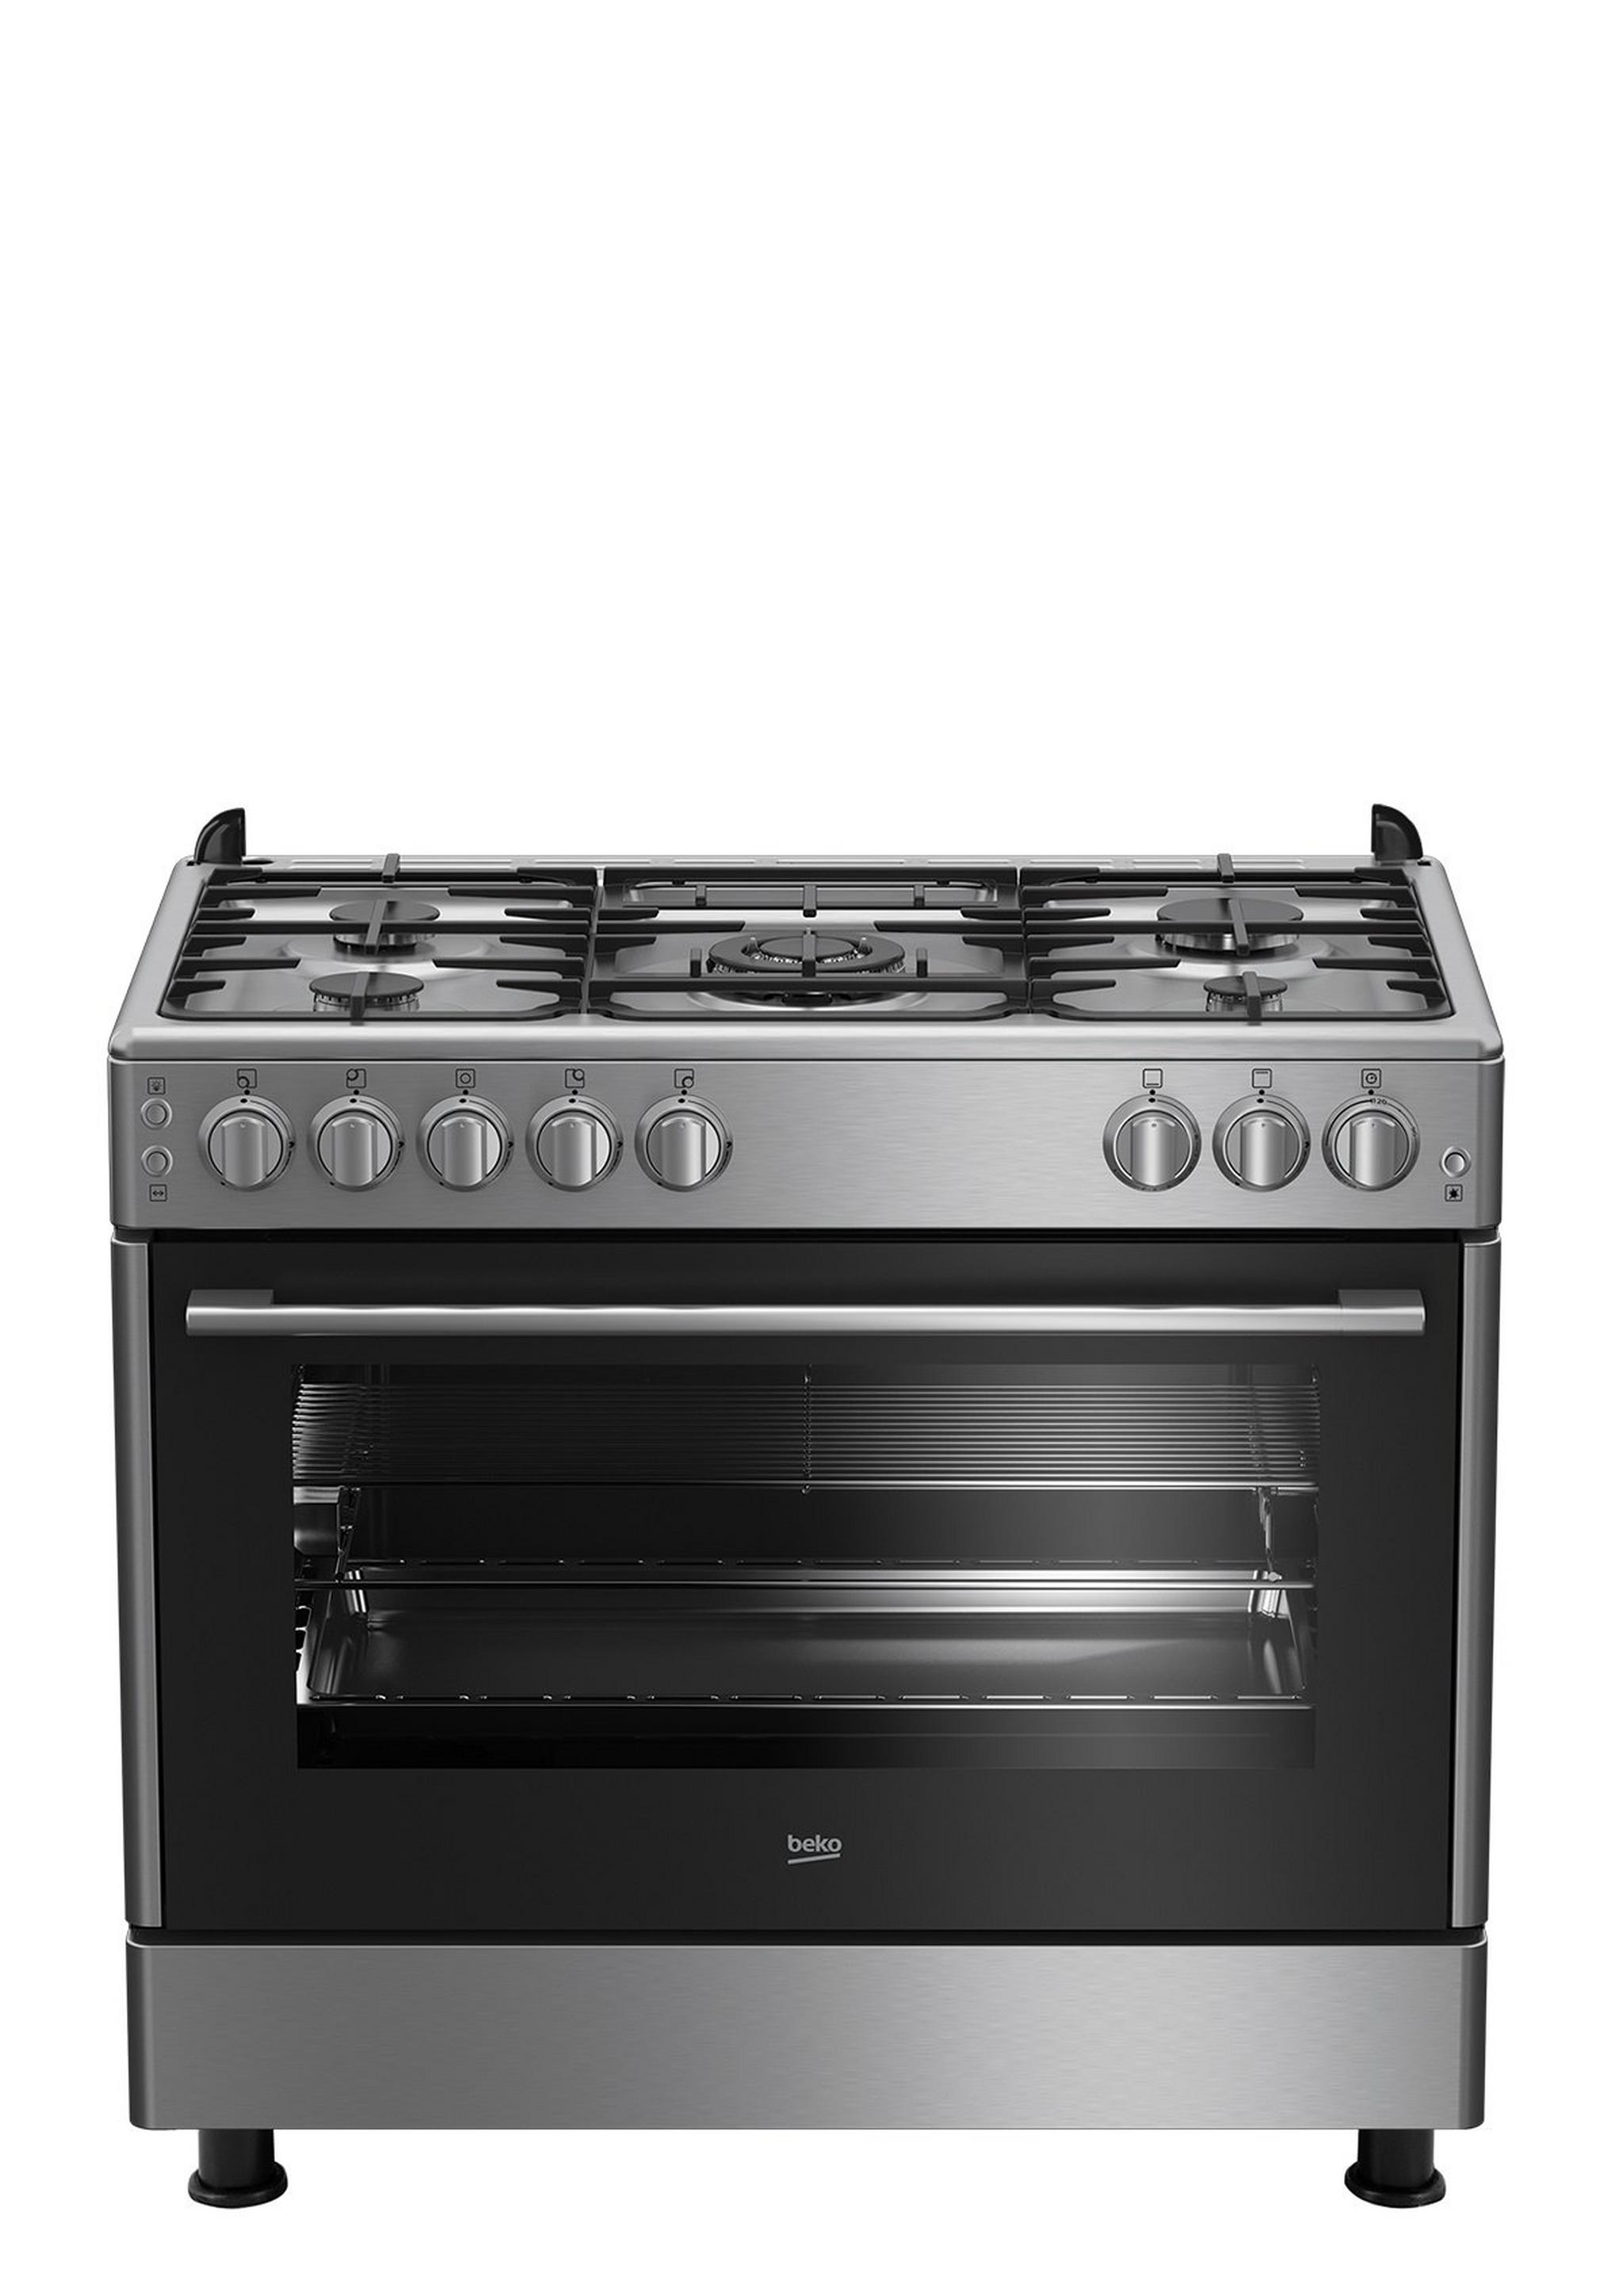 Beko 90X60 5 Burner Gas Cooker (GG 15125 FX) - Grey